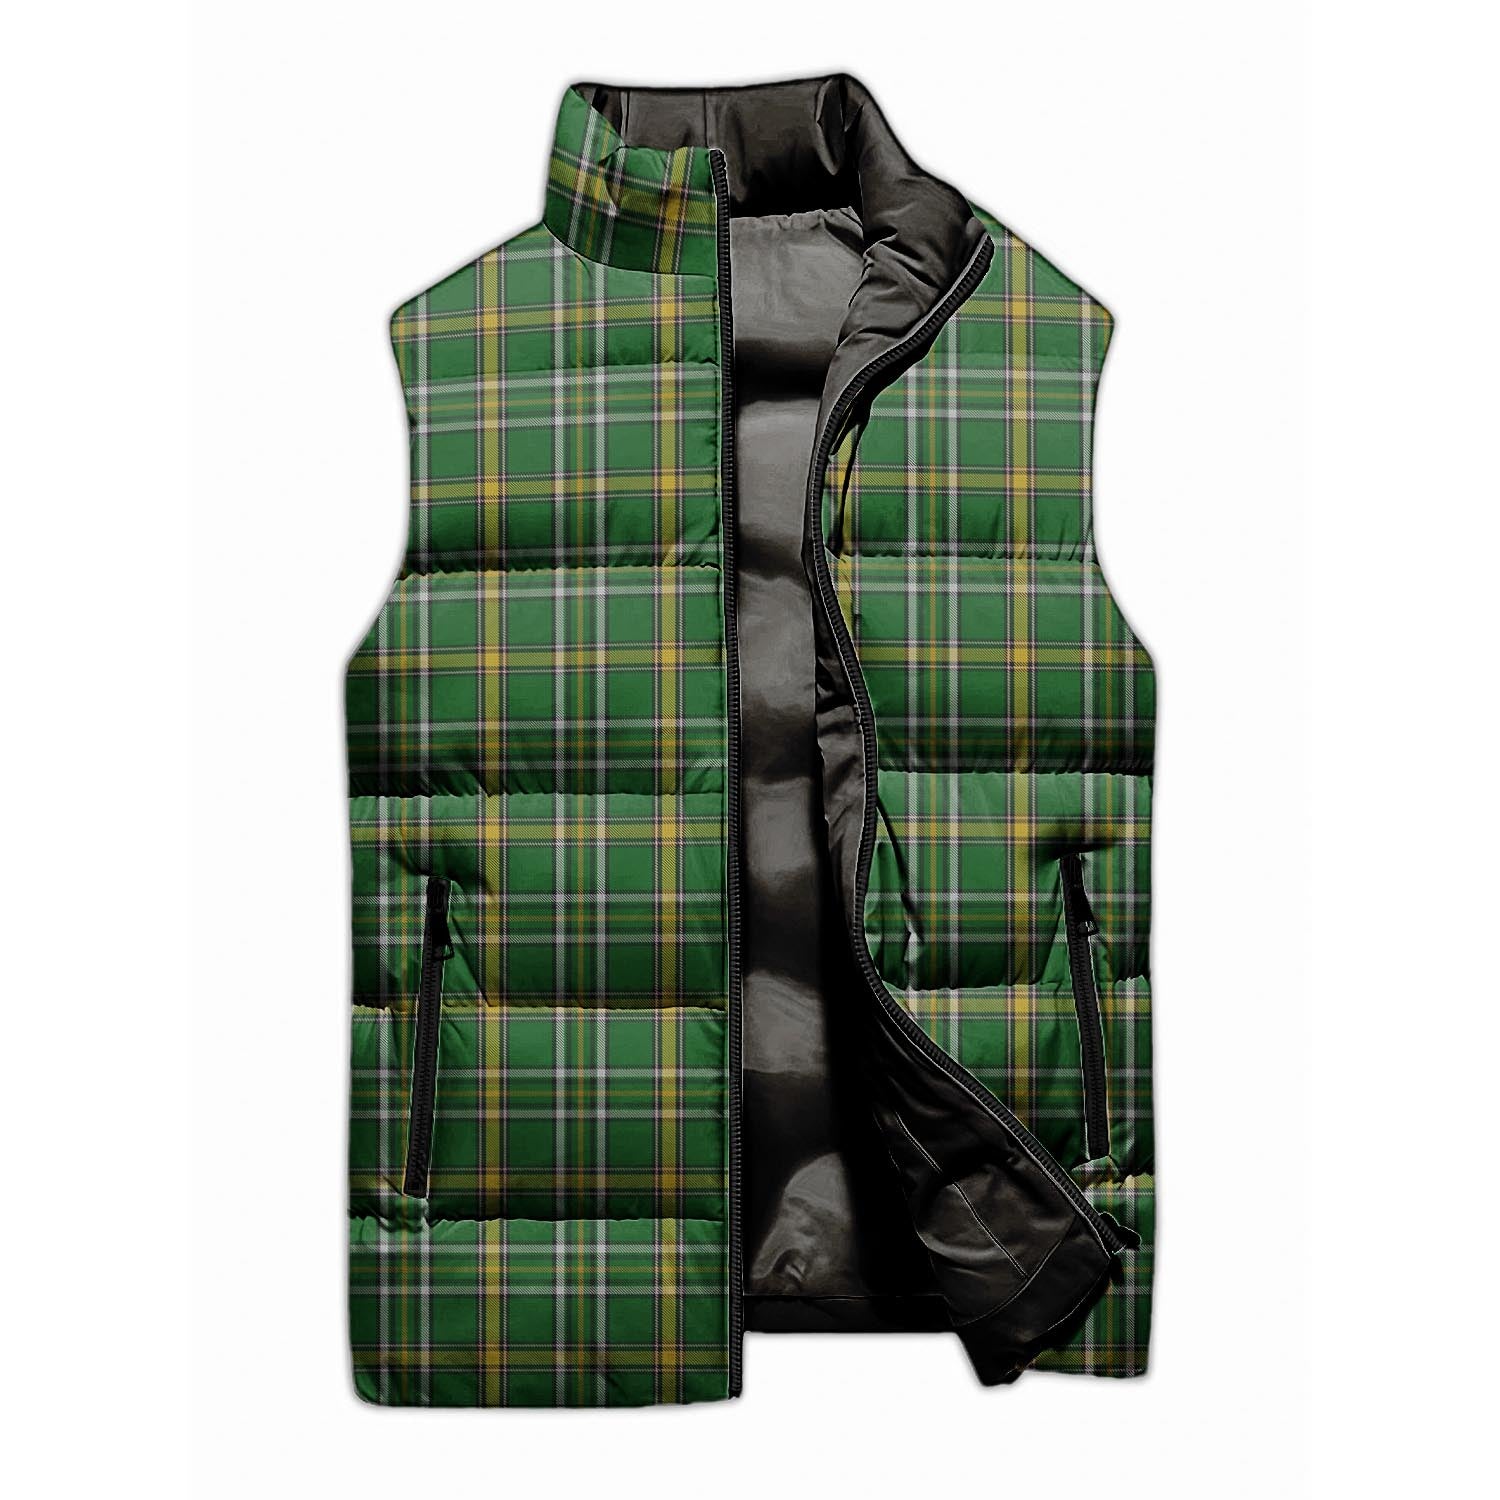 Offaly County Ireland Tartan Sleeveless Puffer Jacket - Tartanvibesclothing